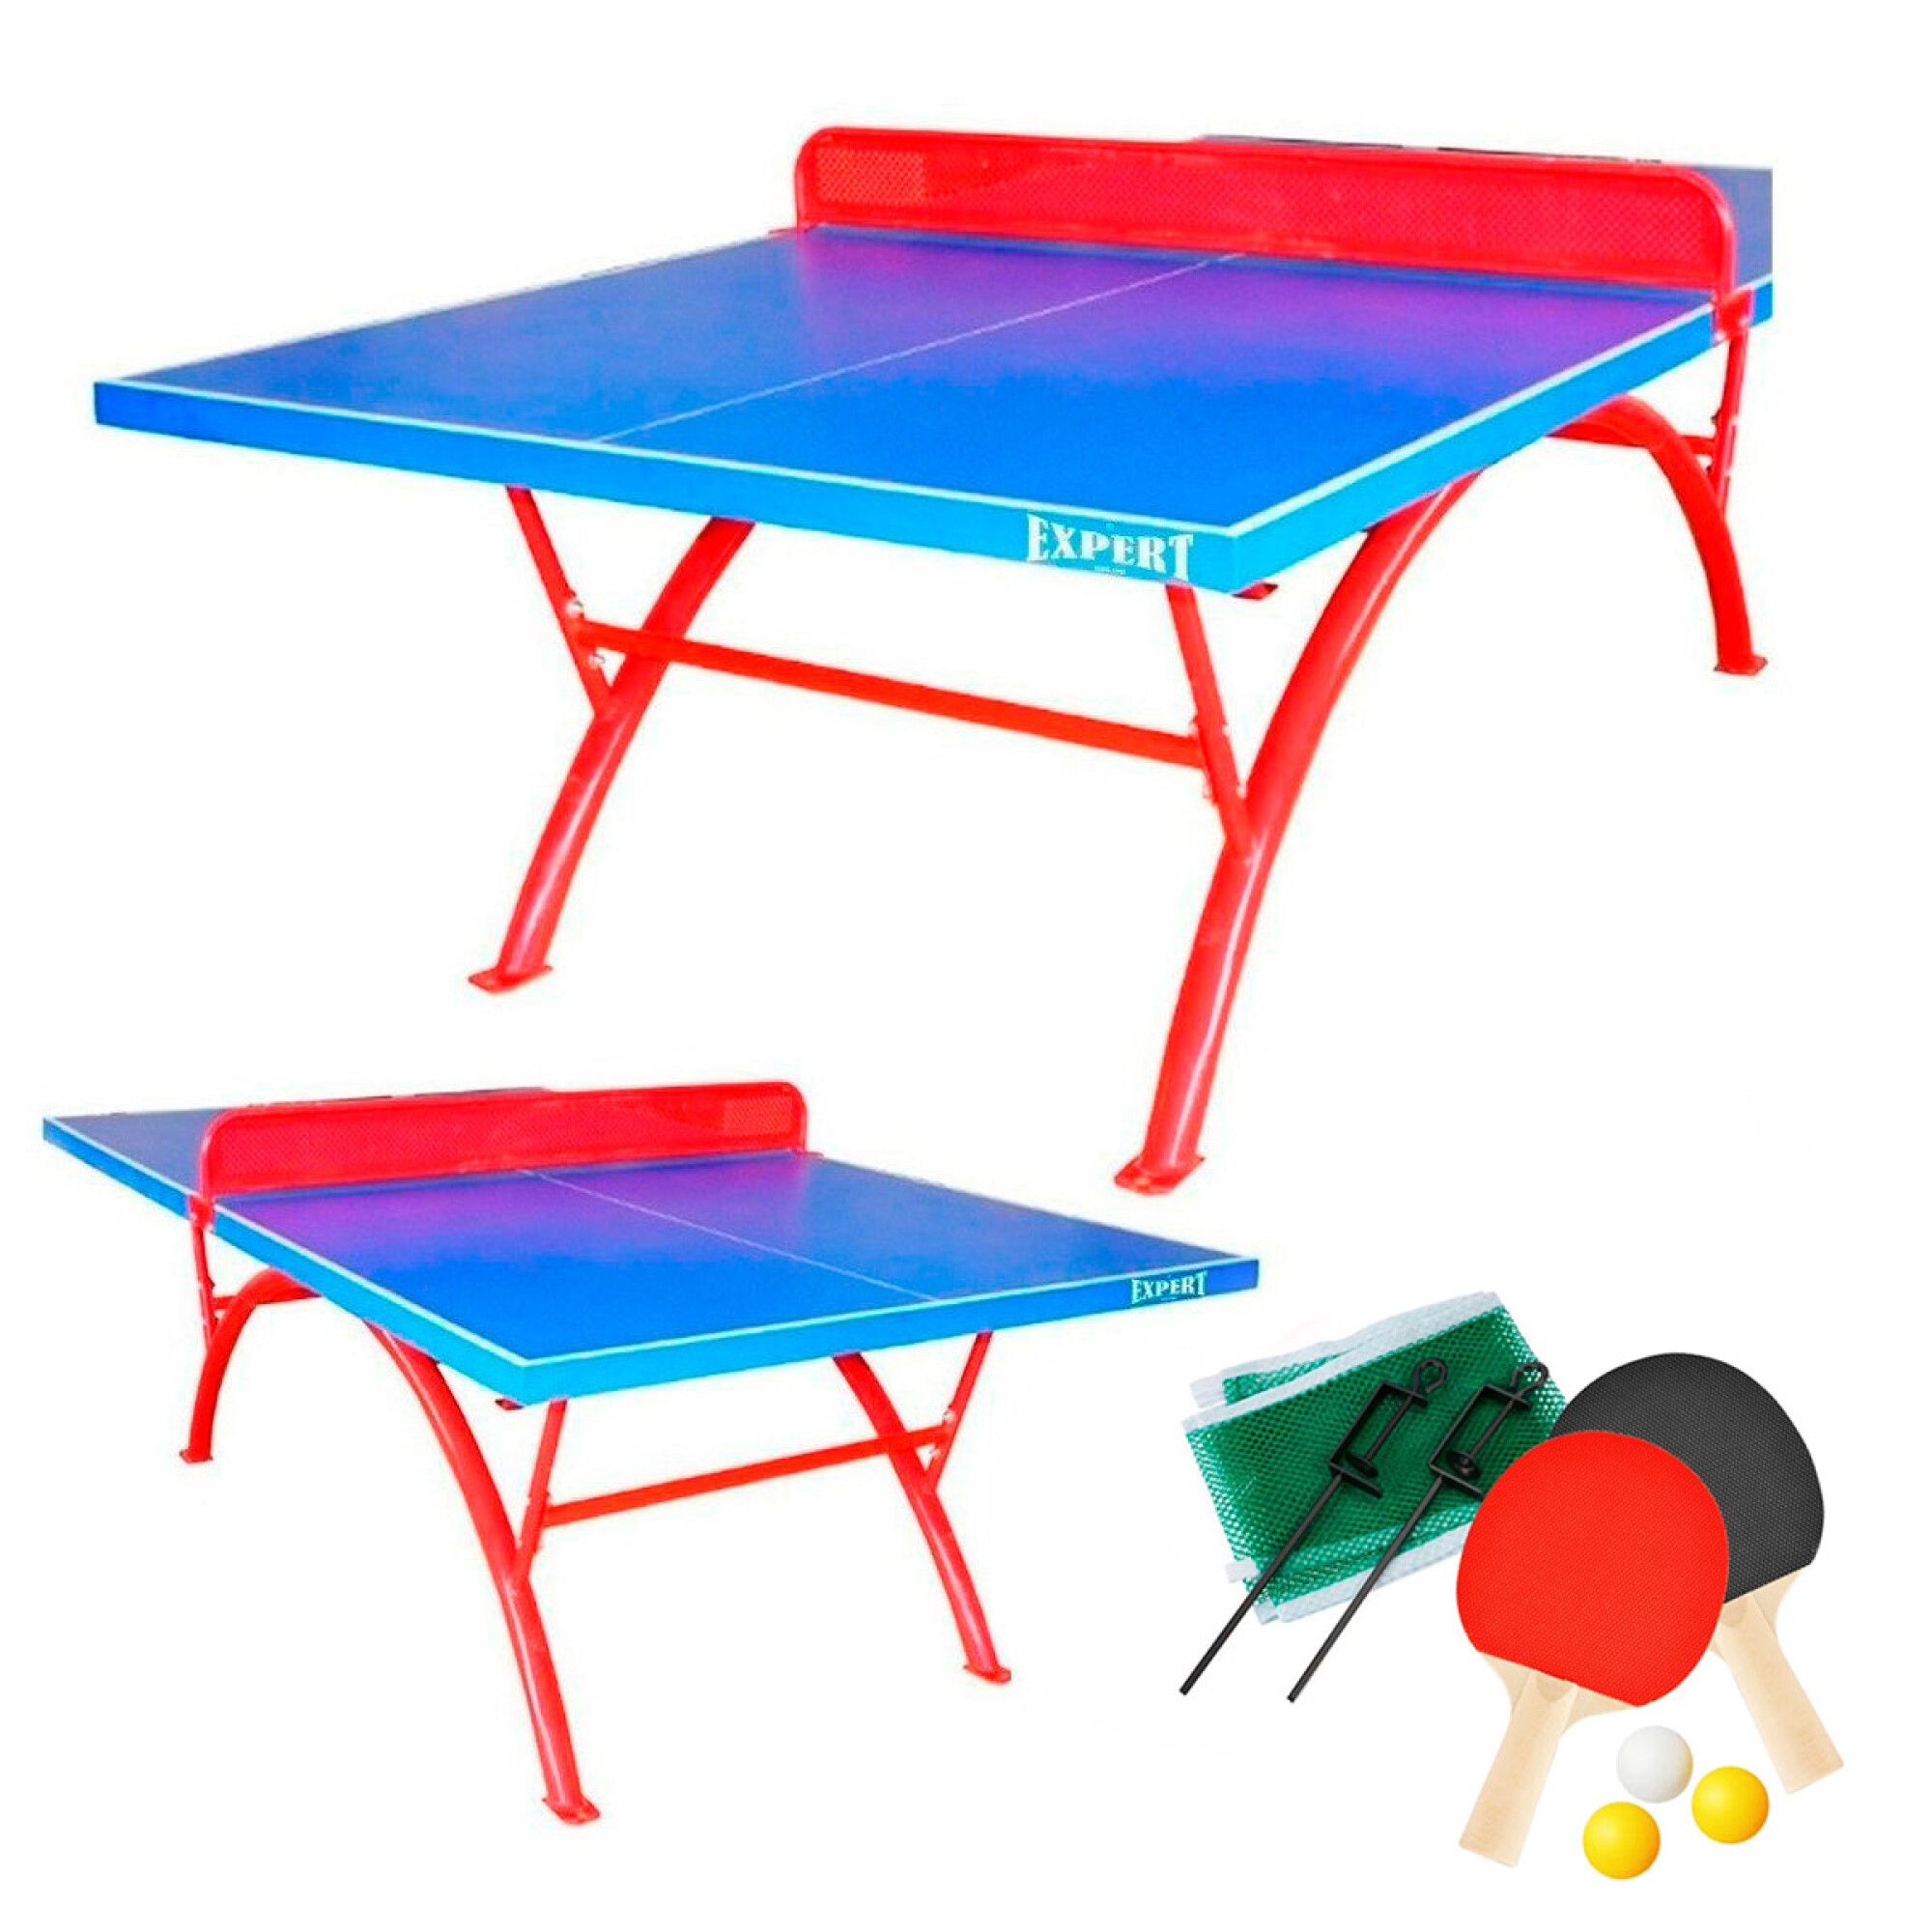 MESA DE PING PONG - Deportes Jimmy, mesa de ping pong 